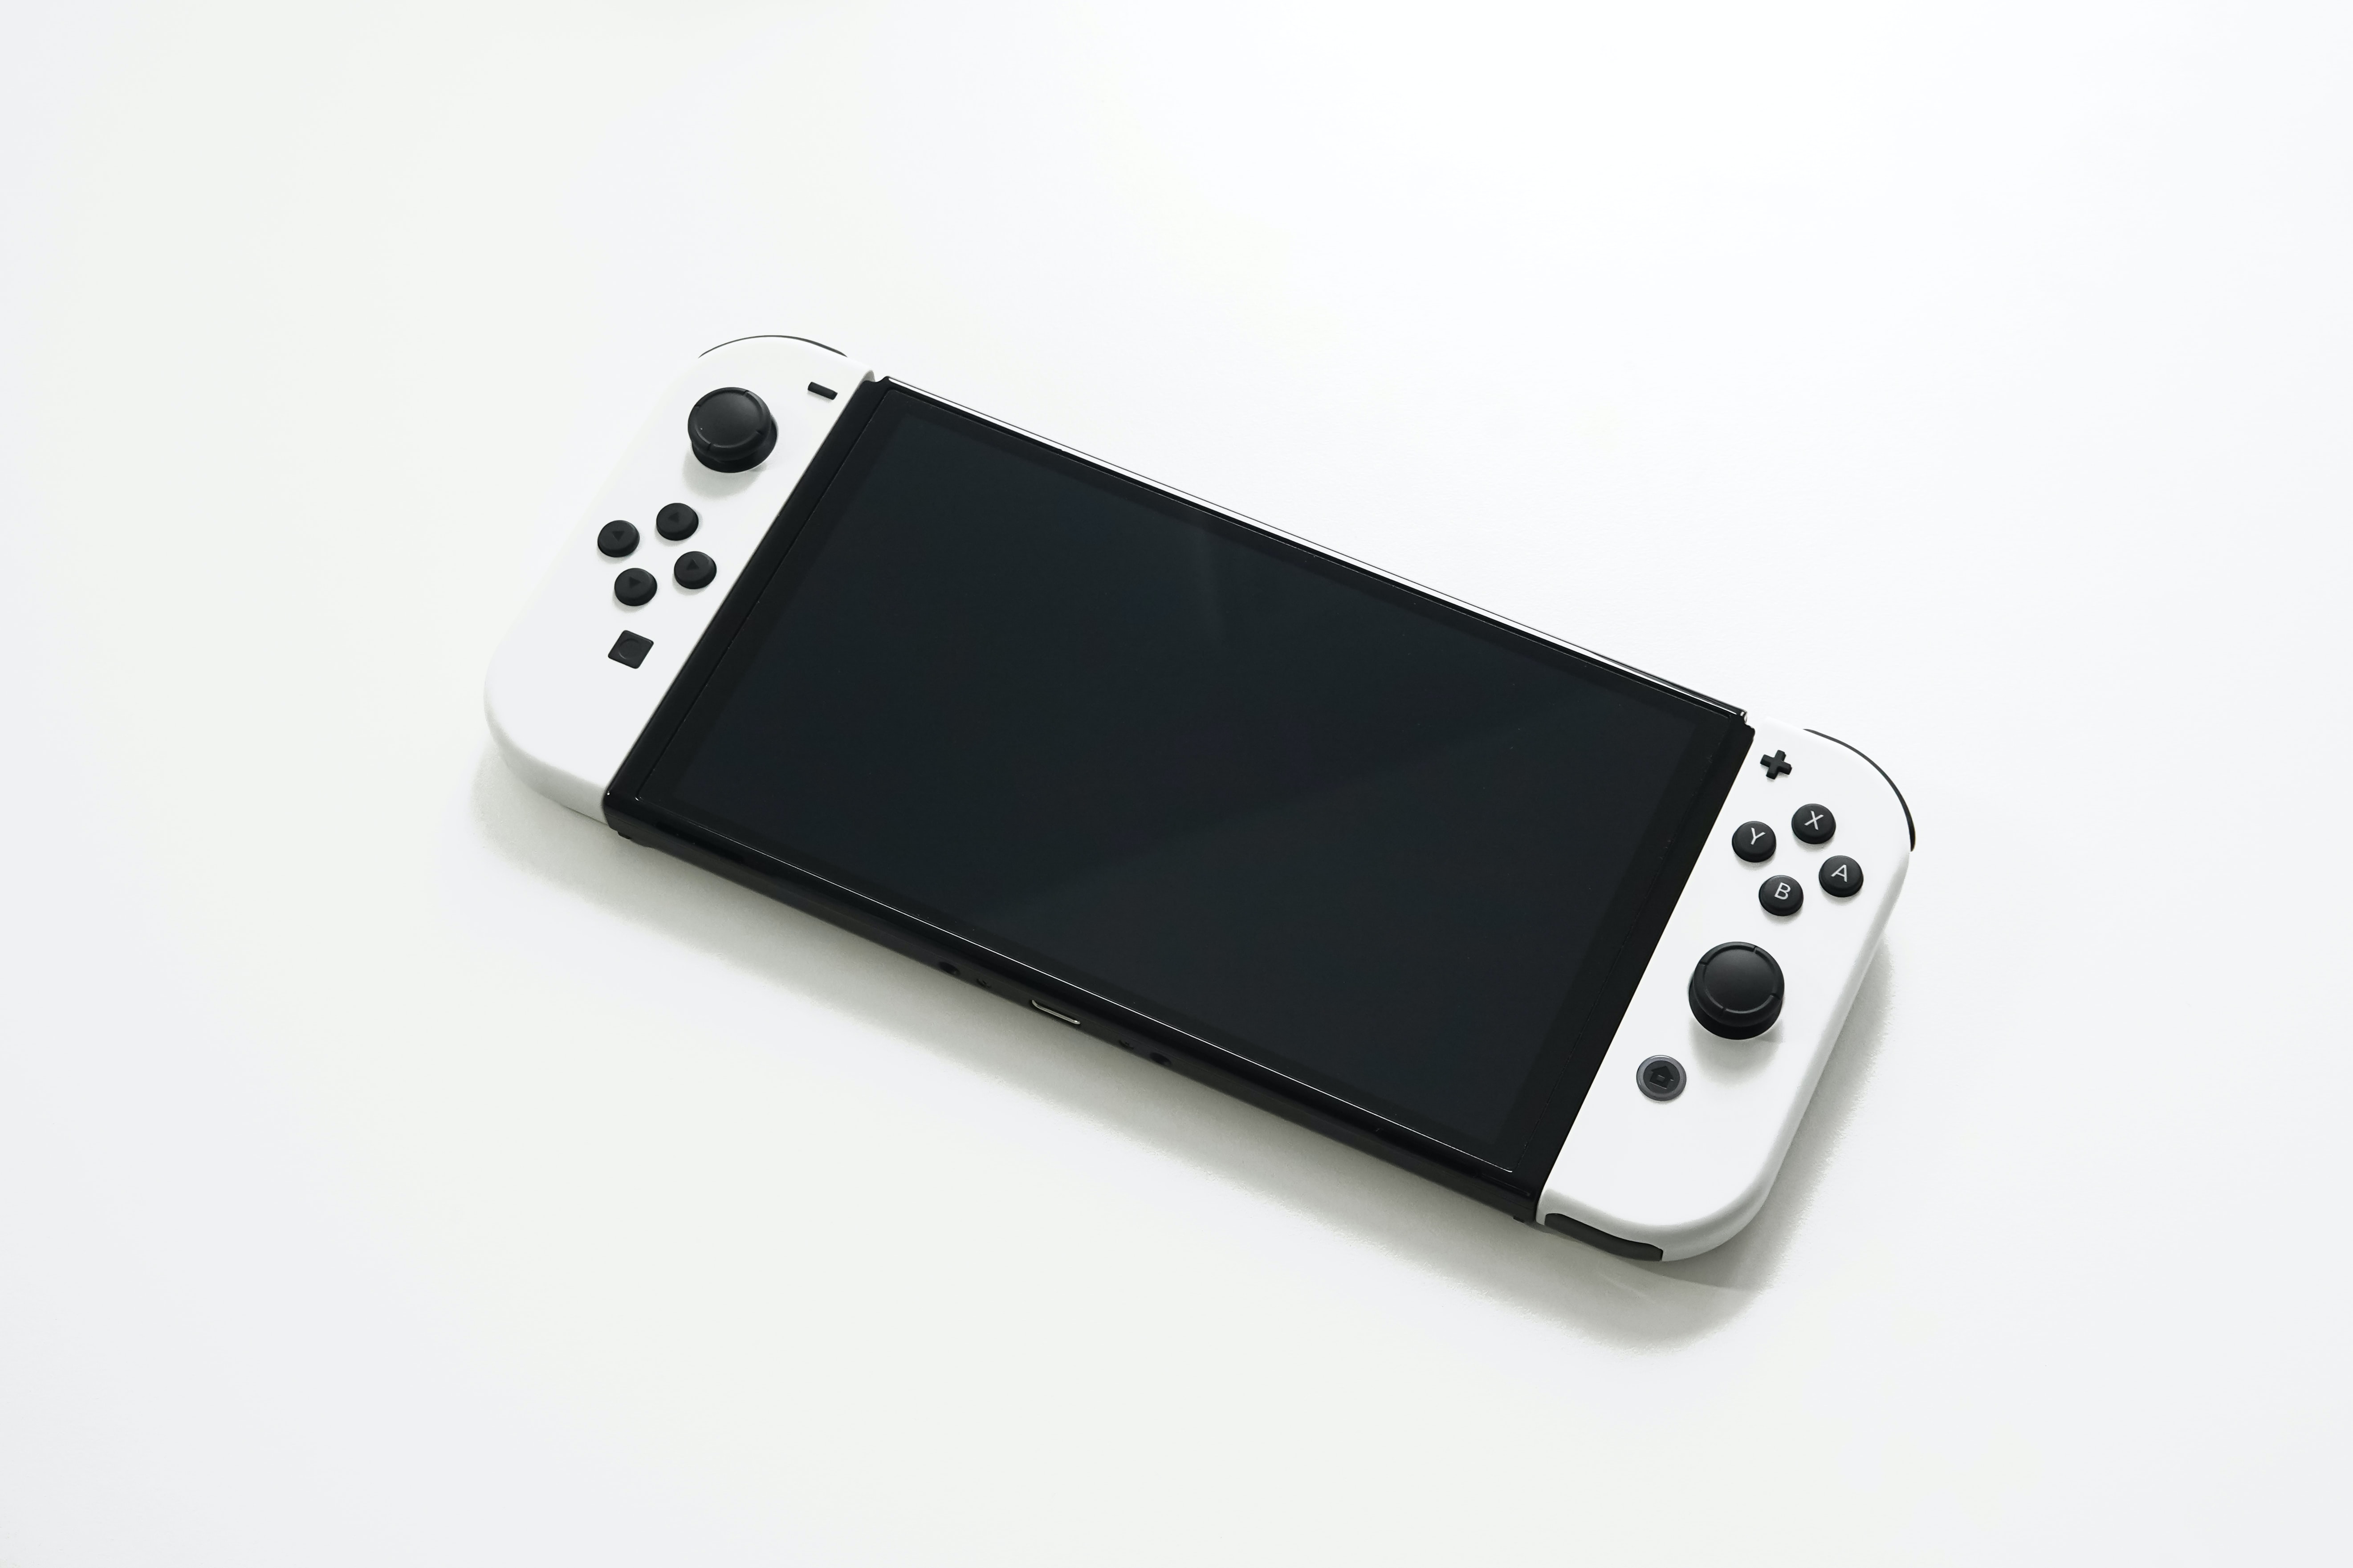 Nintendo confirms no new devices until April - NotebookCheck.net News